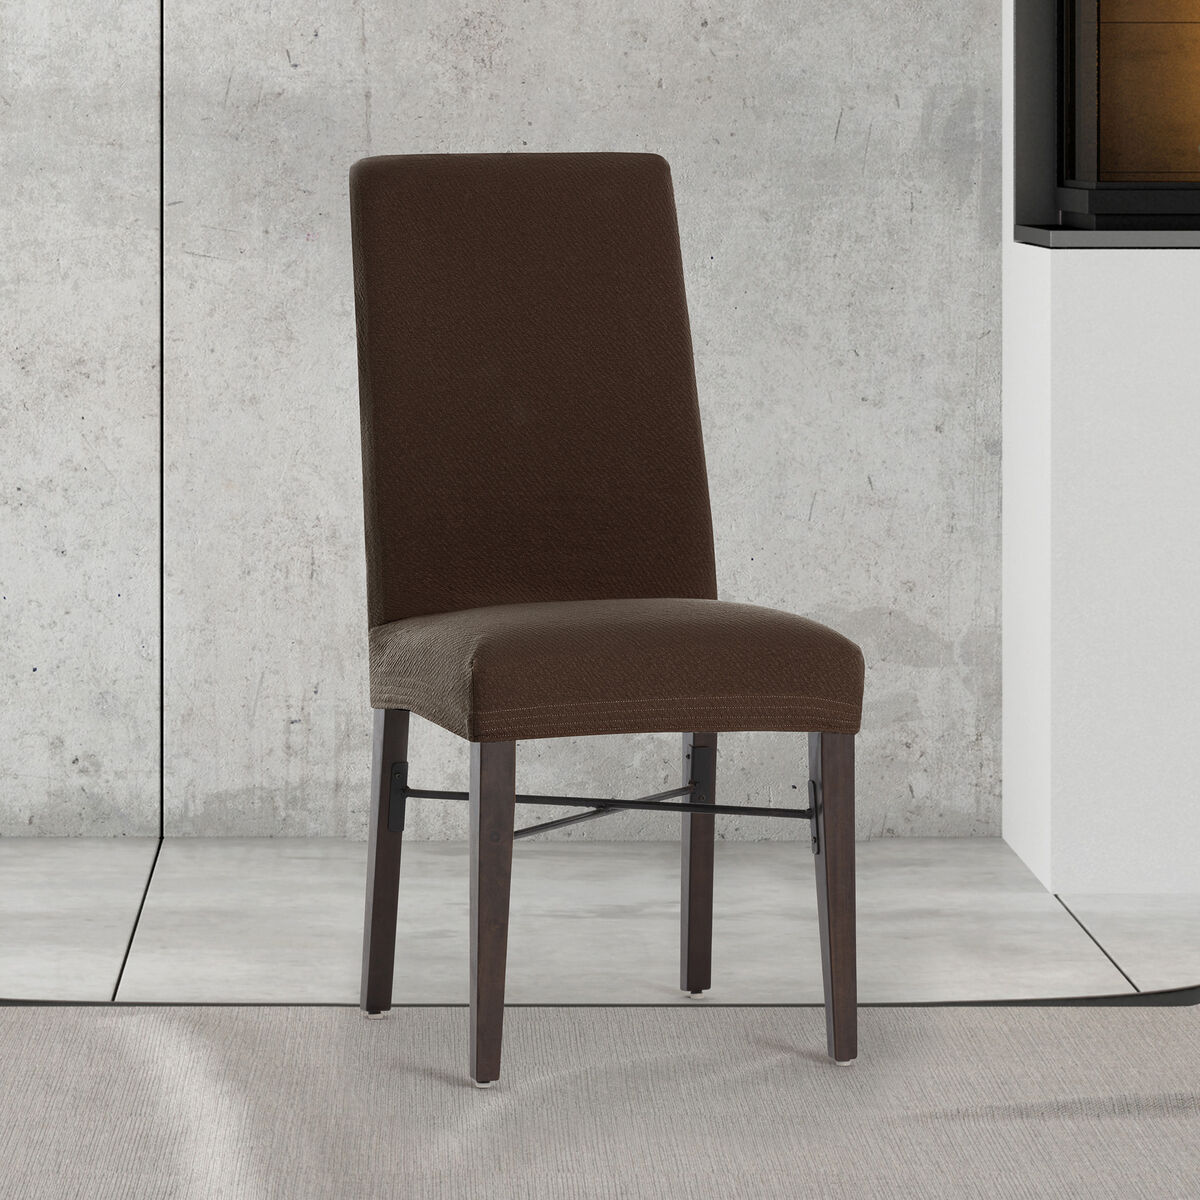 Chair Cover Eysa BRONX Brown 50 x 55 x 50 cm 2 Units